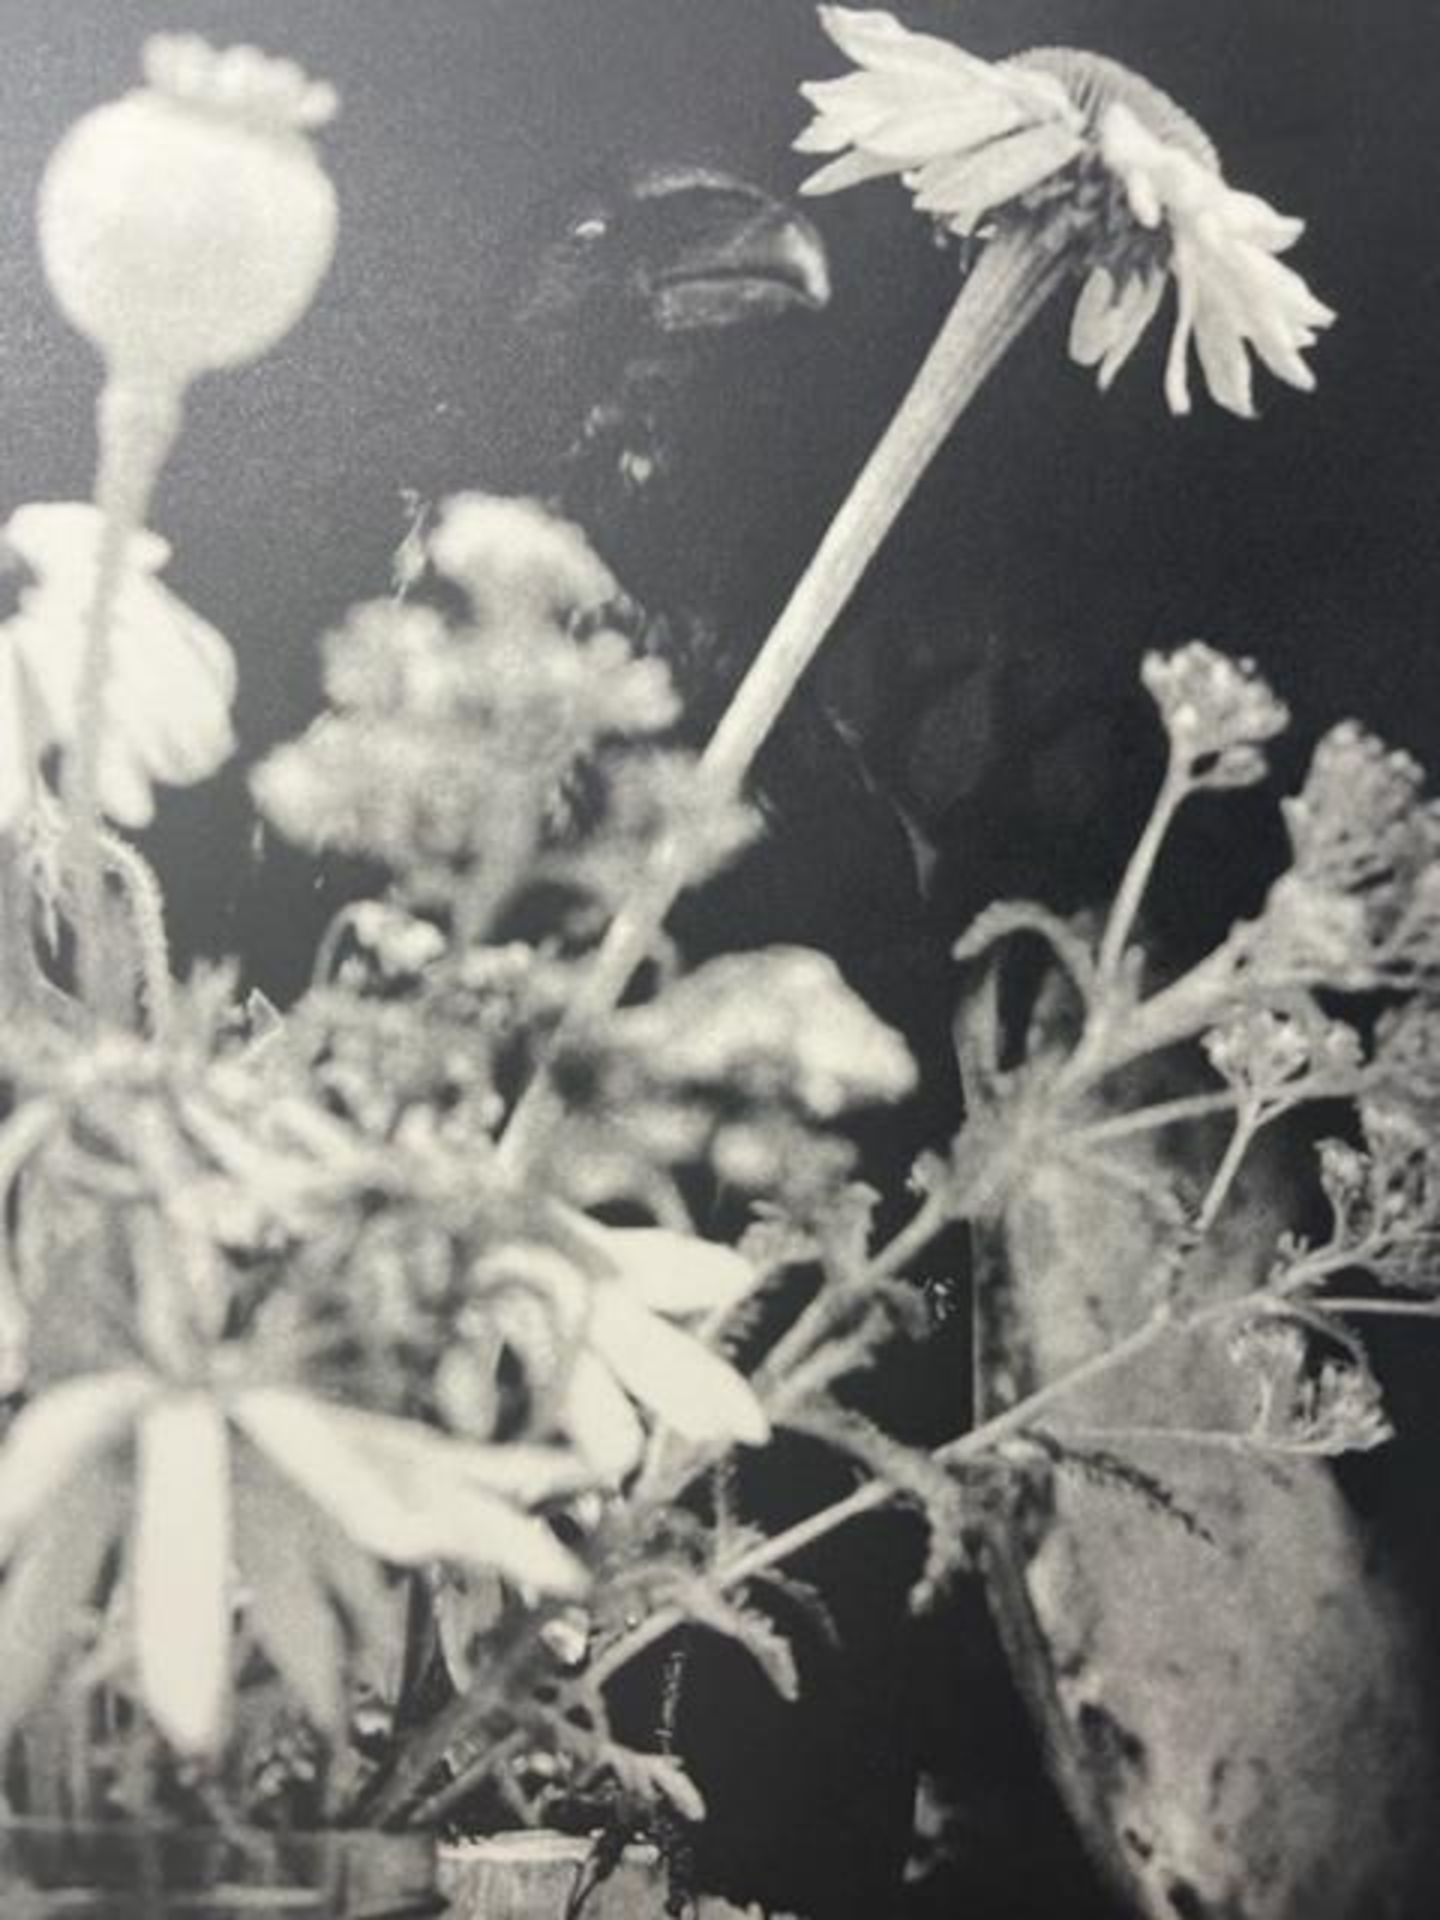 Jim Dine "Untitled" Print. - Image 2 of 6